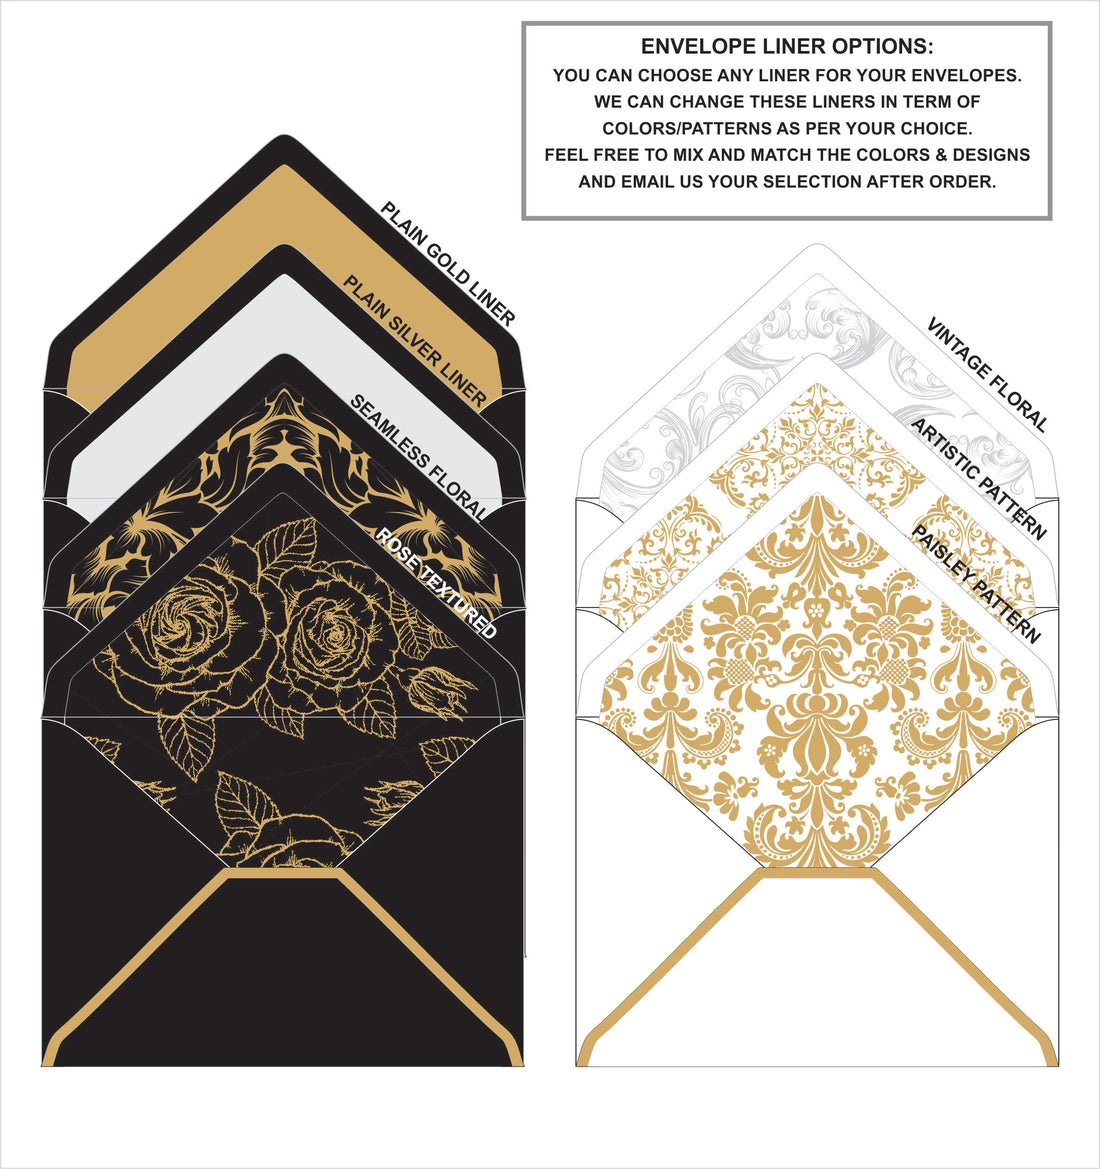 Black Envelope Invitation for Wedding with Gold Border